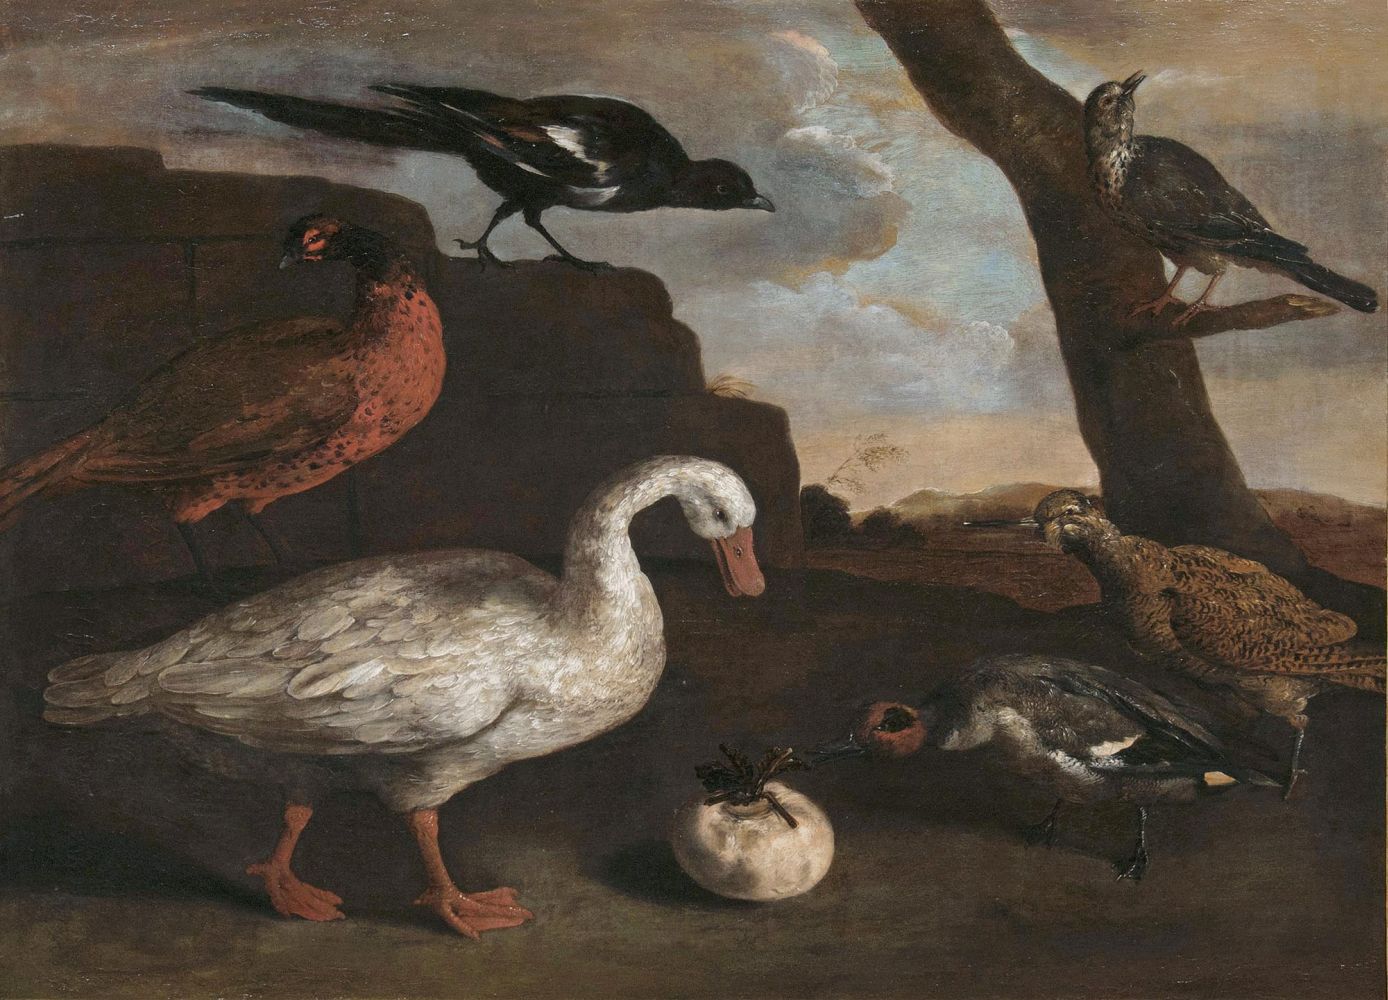 Vögel in einer Landschaft